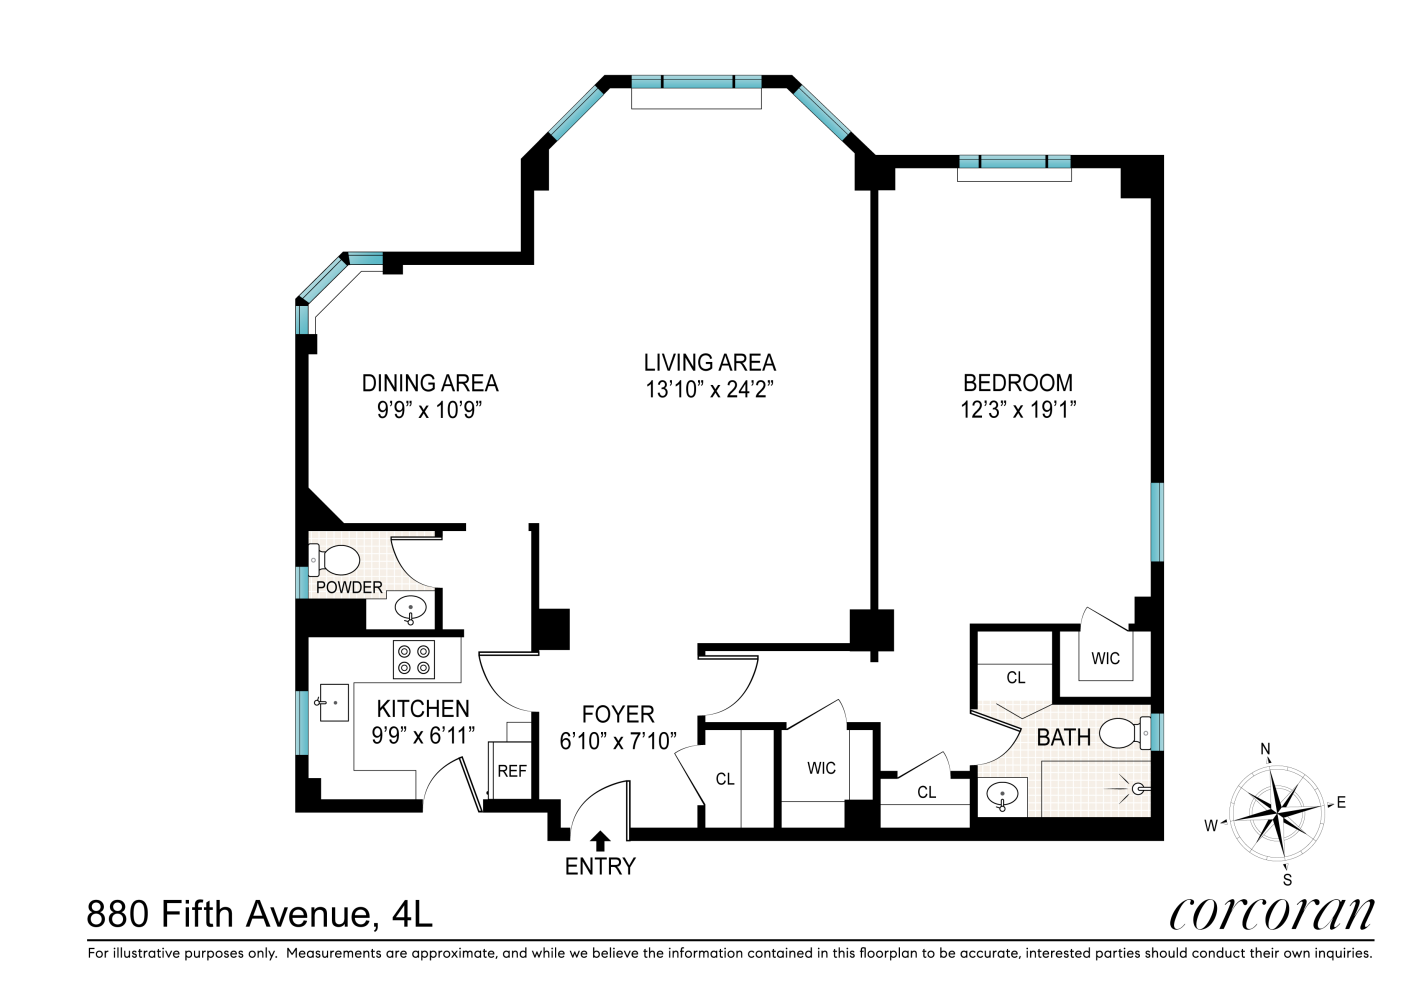 Floorplan for 880 5th Avenue, 4L